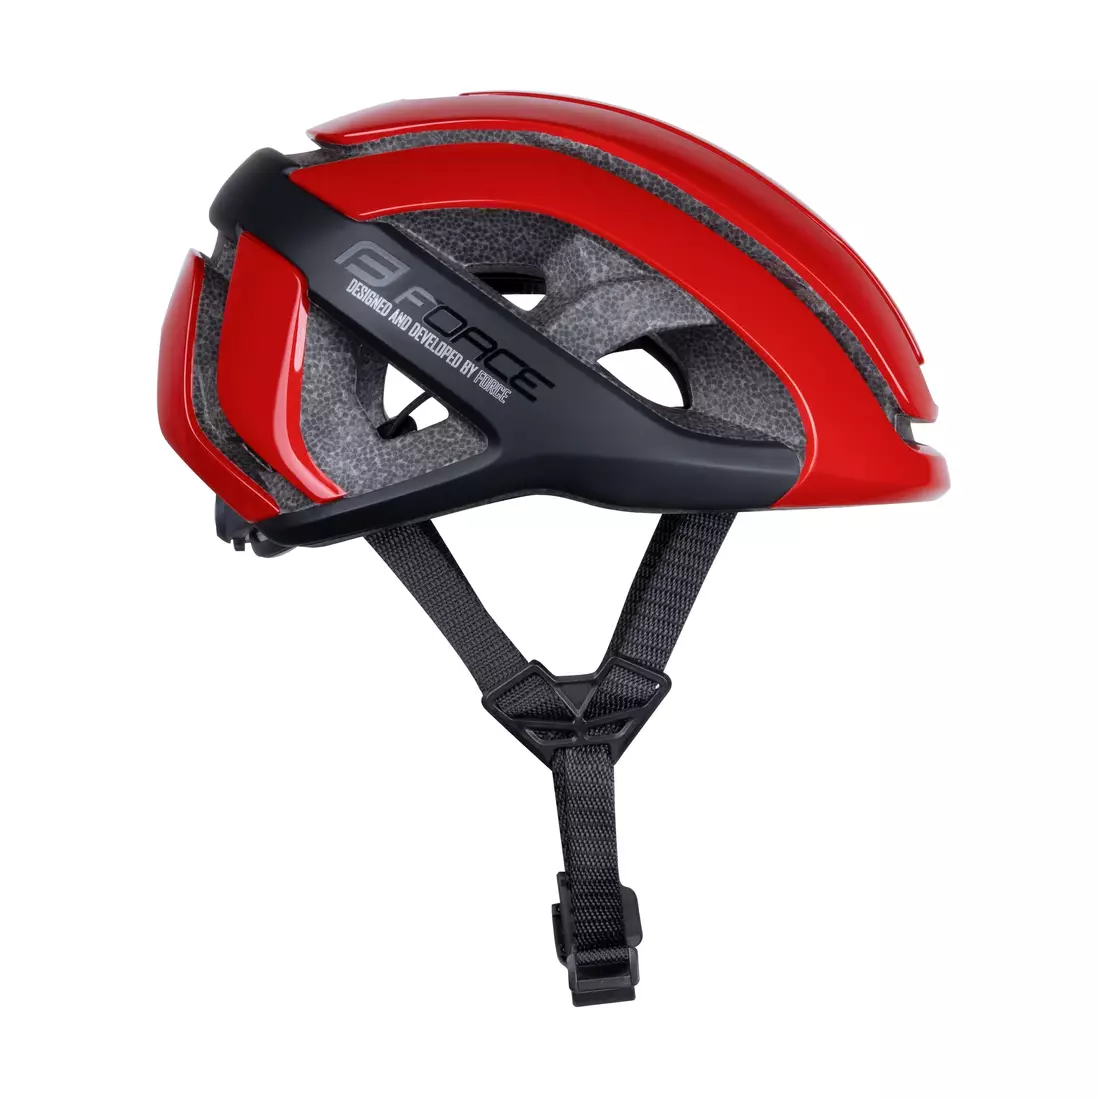 FORCE Road bike helmet FORCE NEO, red-black, 902836